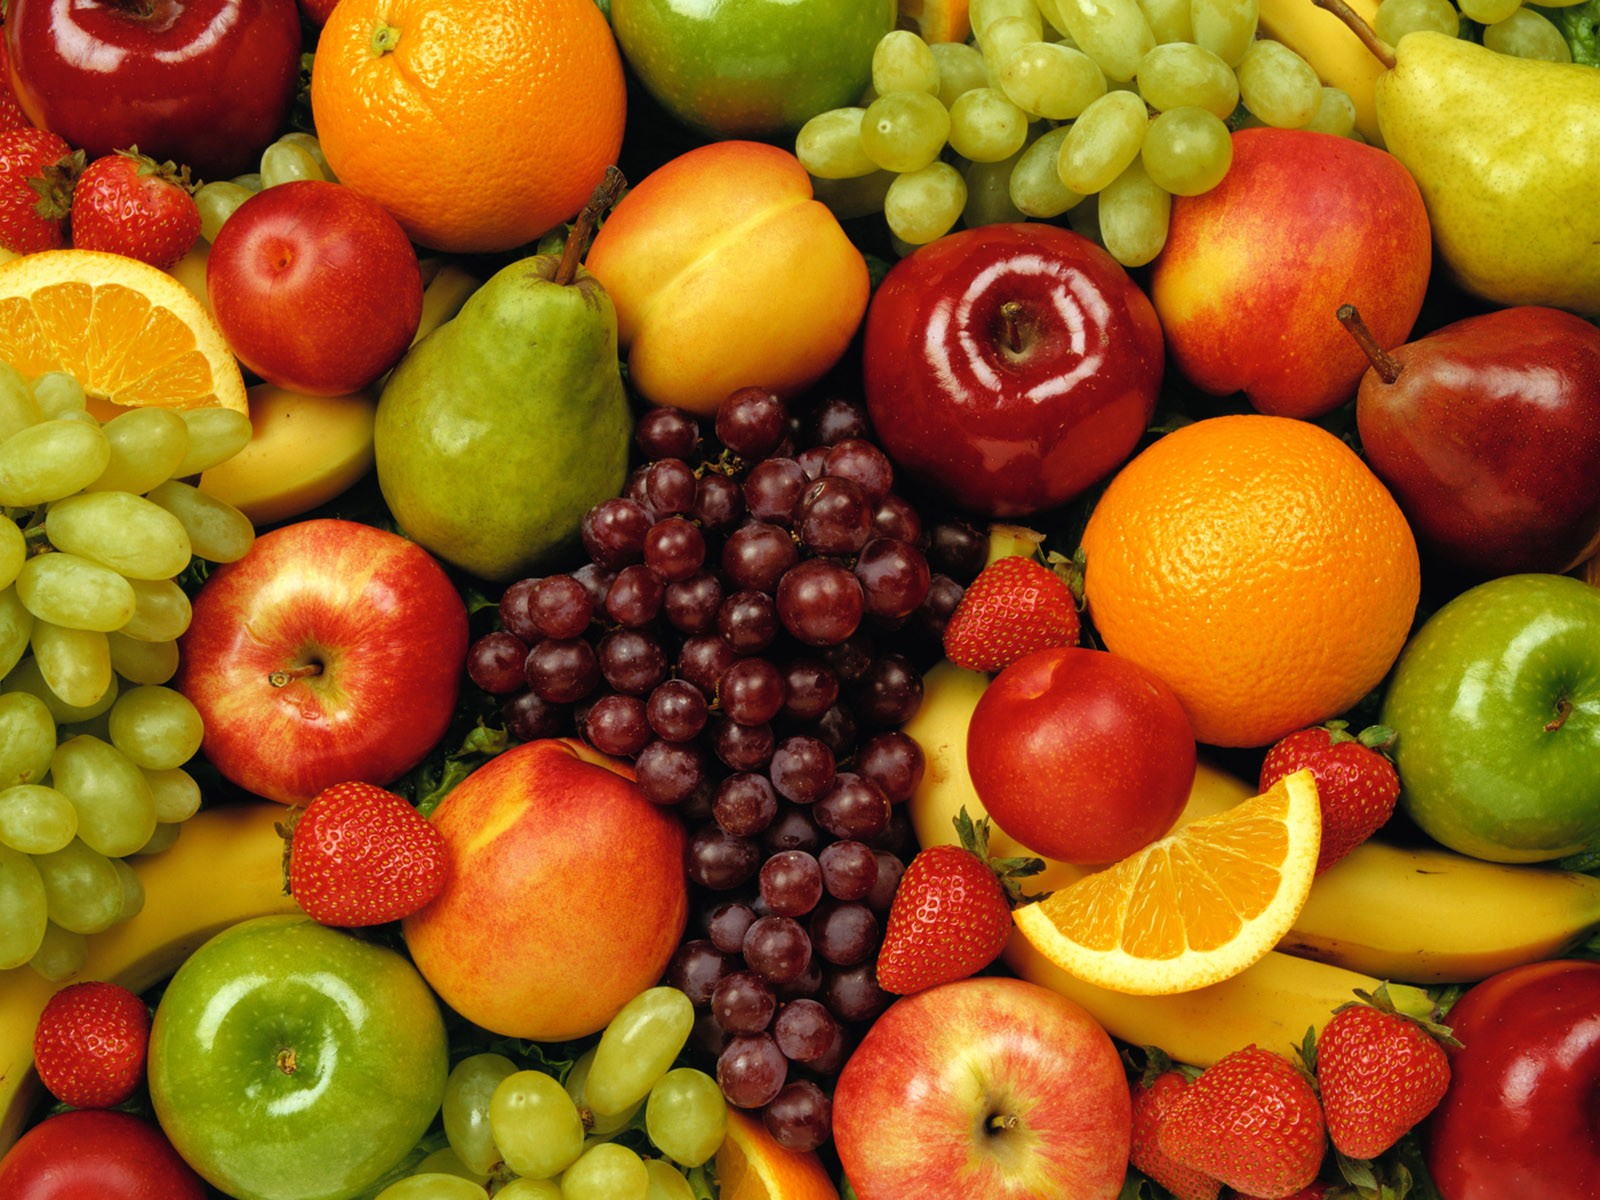 1459965 descargar imagen alimento, fruta, manzana, uvas, naranja), pera, fresa: fondos de pantalla y protectores de pantalla gratis